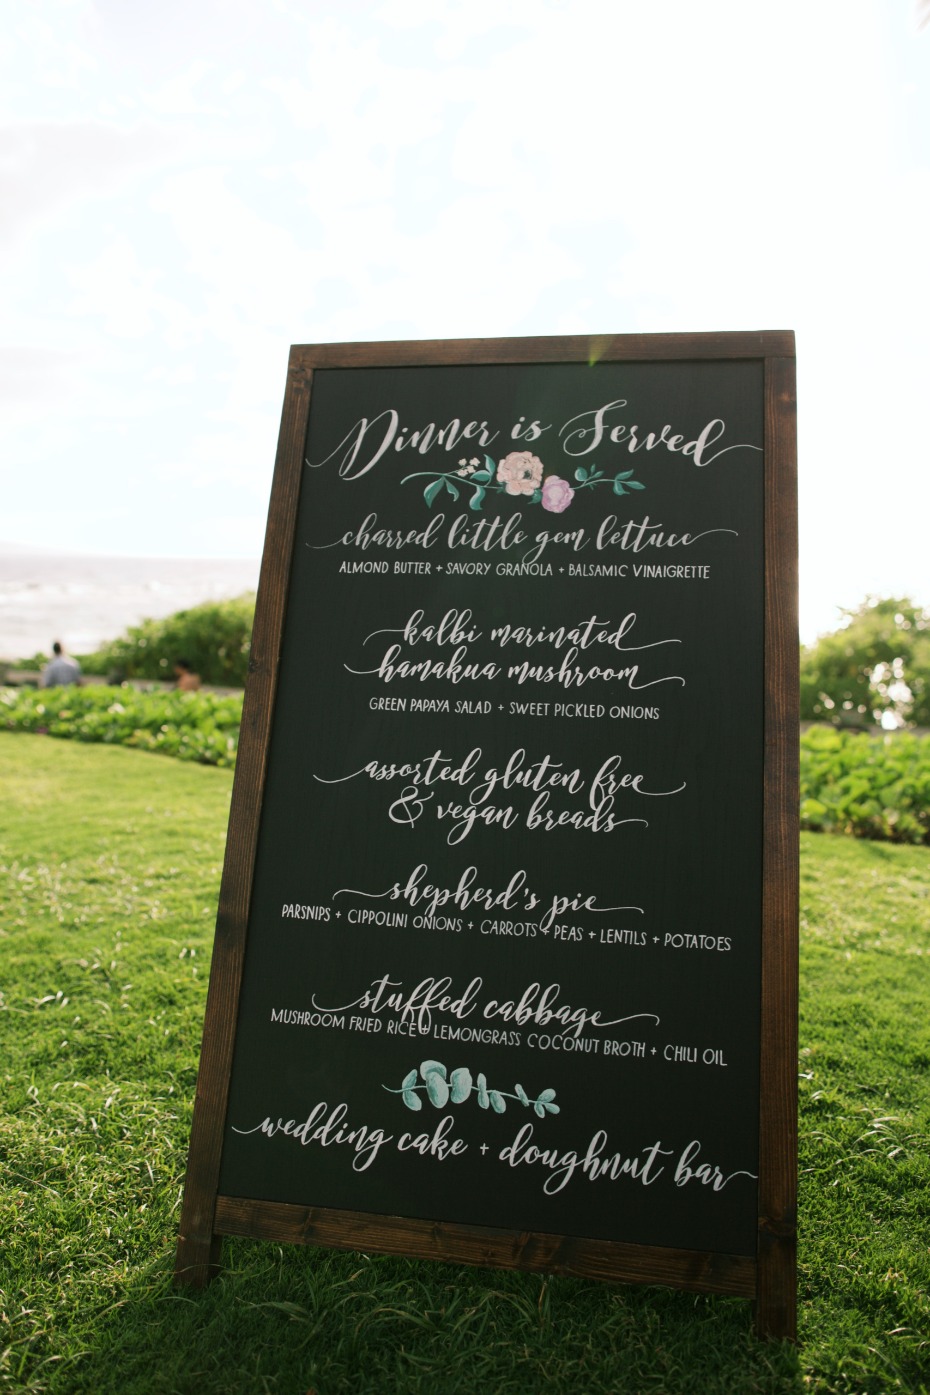 Beautiful menu sign